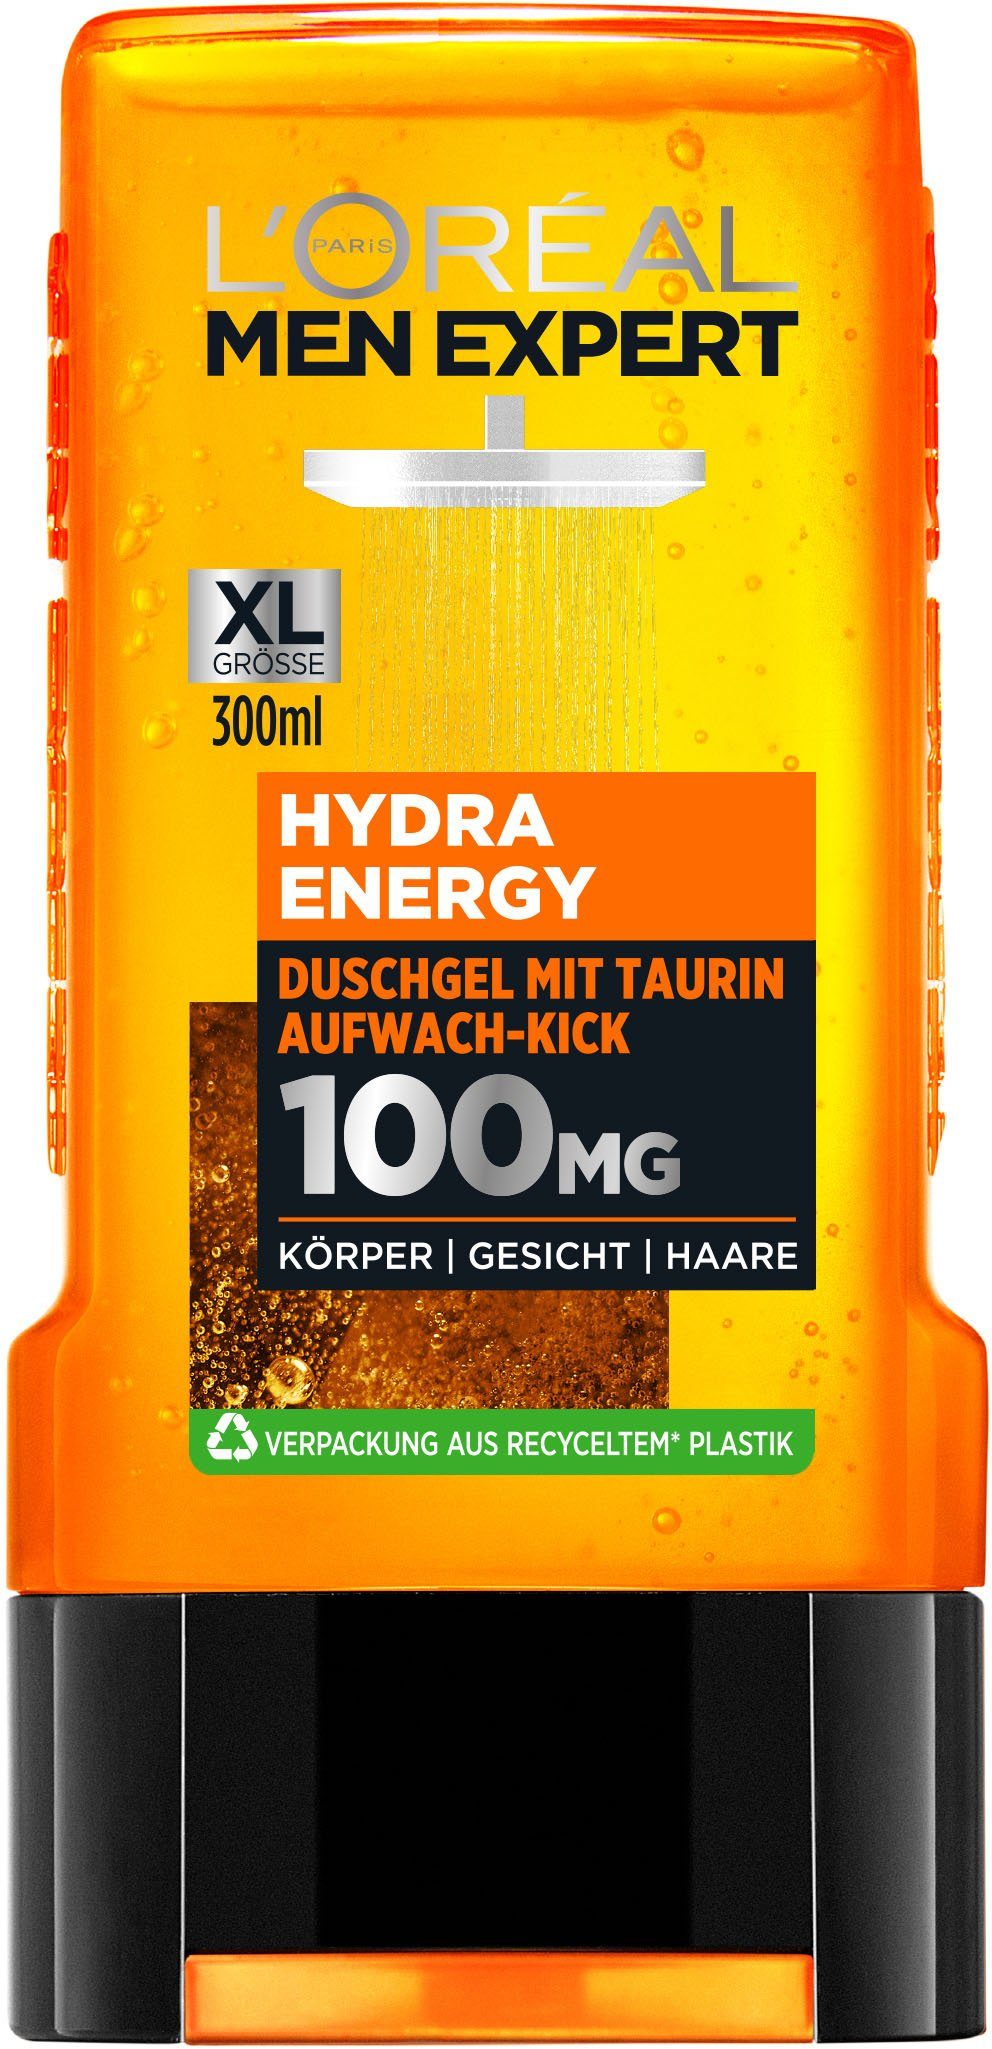 6-tlg. EXPERT PARIS MEN Energy Duschgel Hydra L'ORÉAL Taurin,